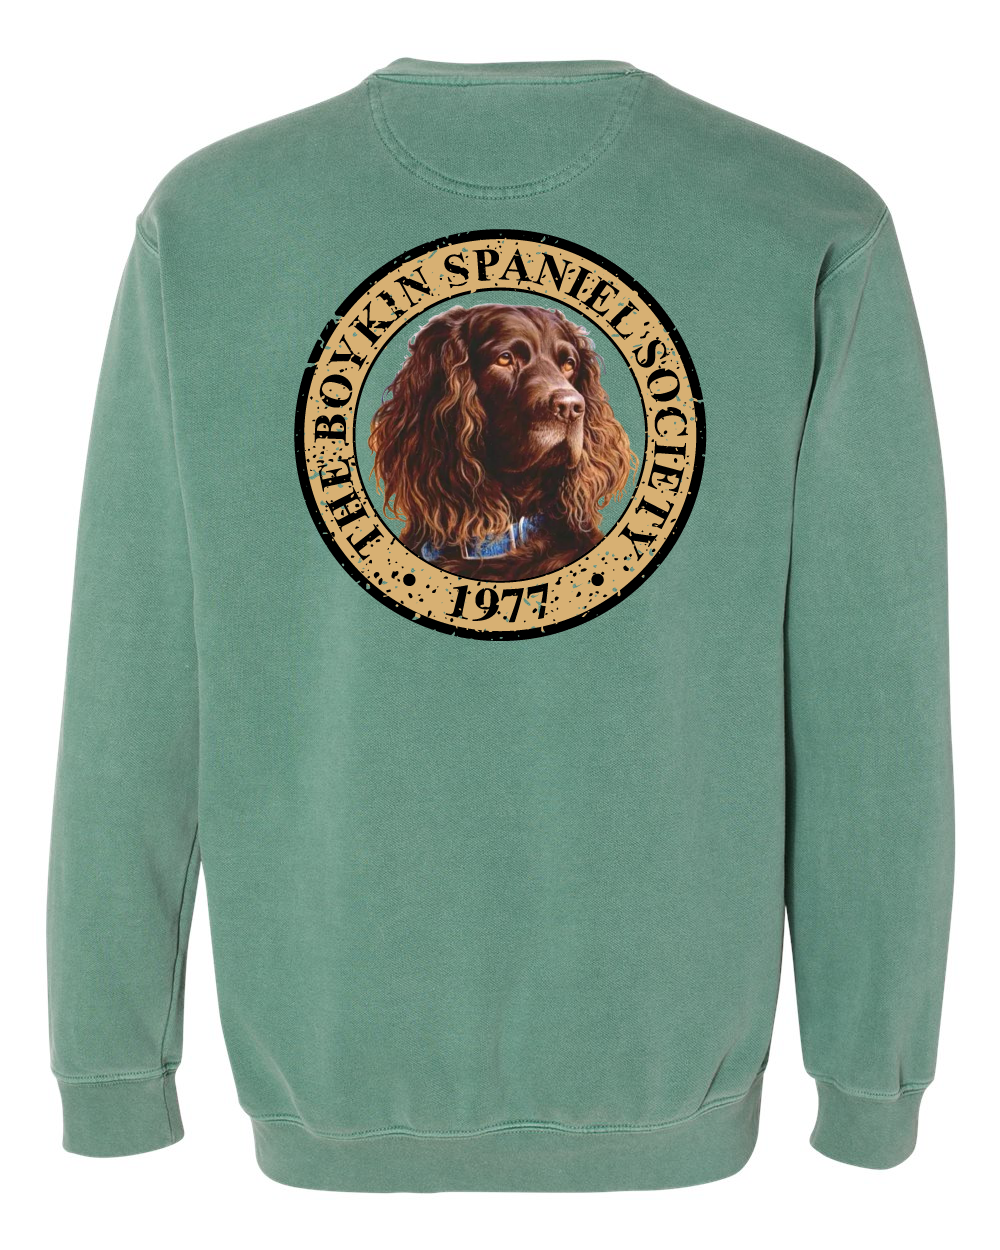 Boykin Spaniel Society Full Color Seal Crewneck Sweatshirt